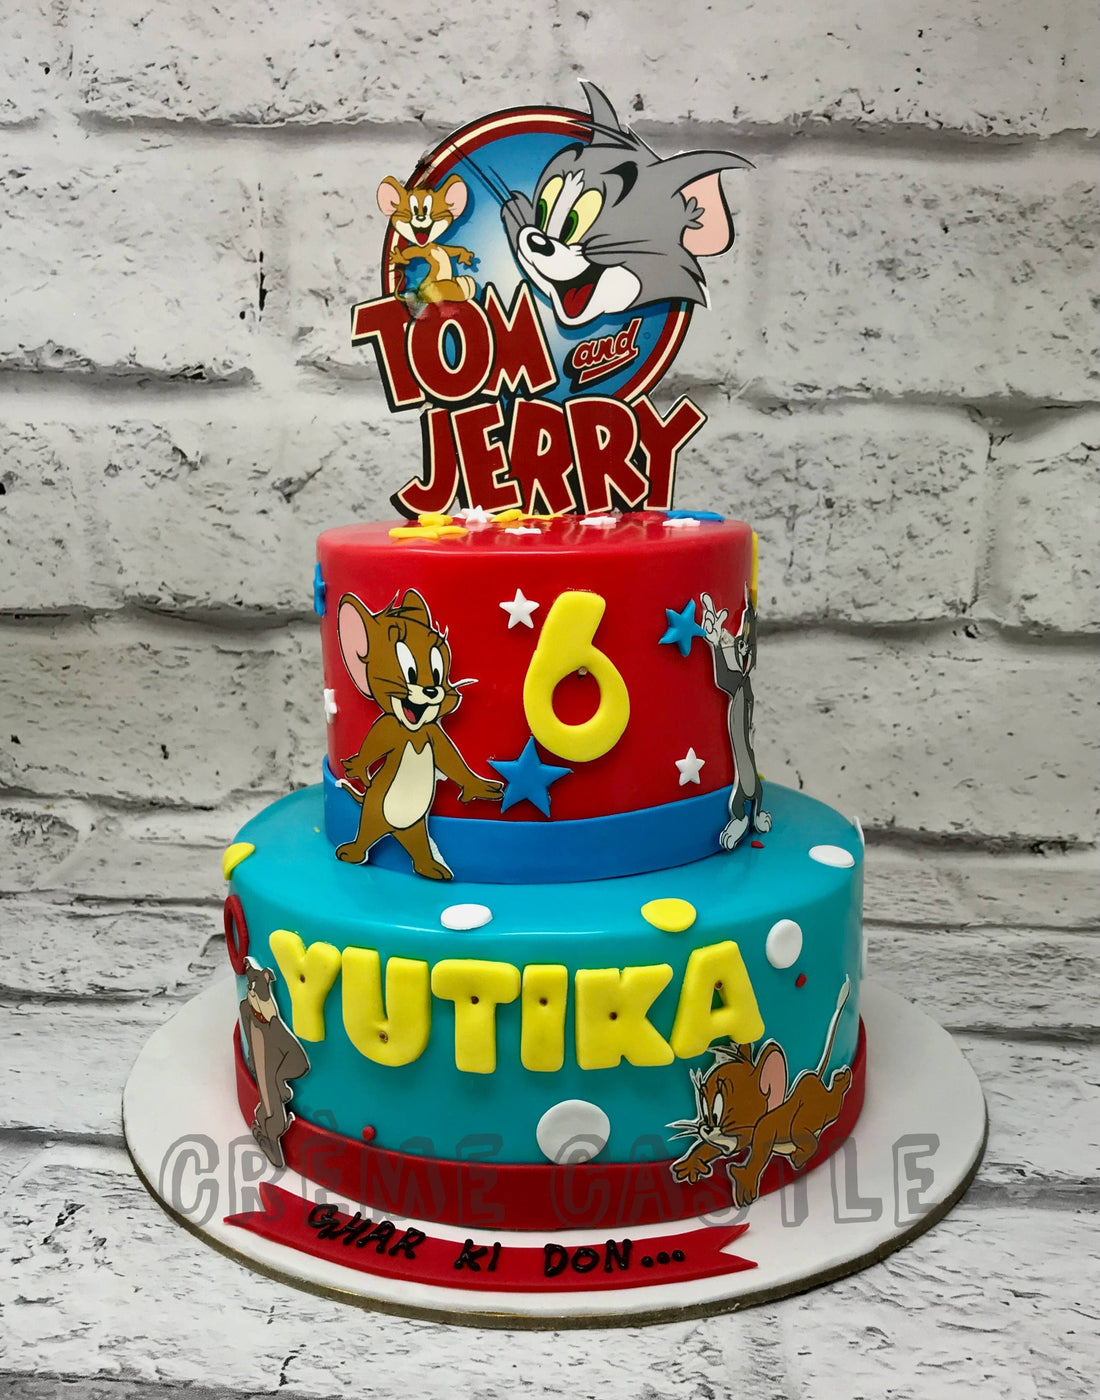 Tom Jerry Tier Cake